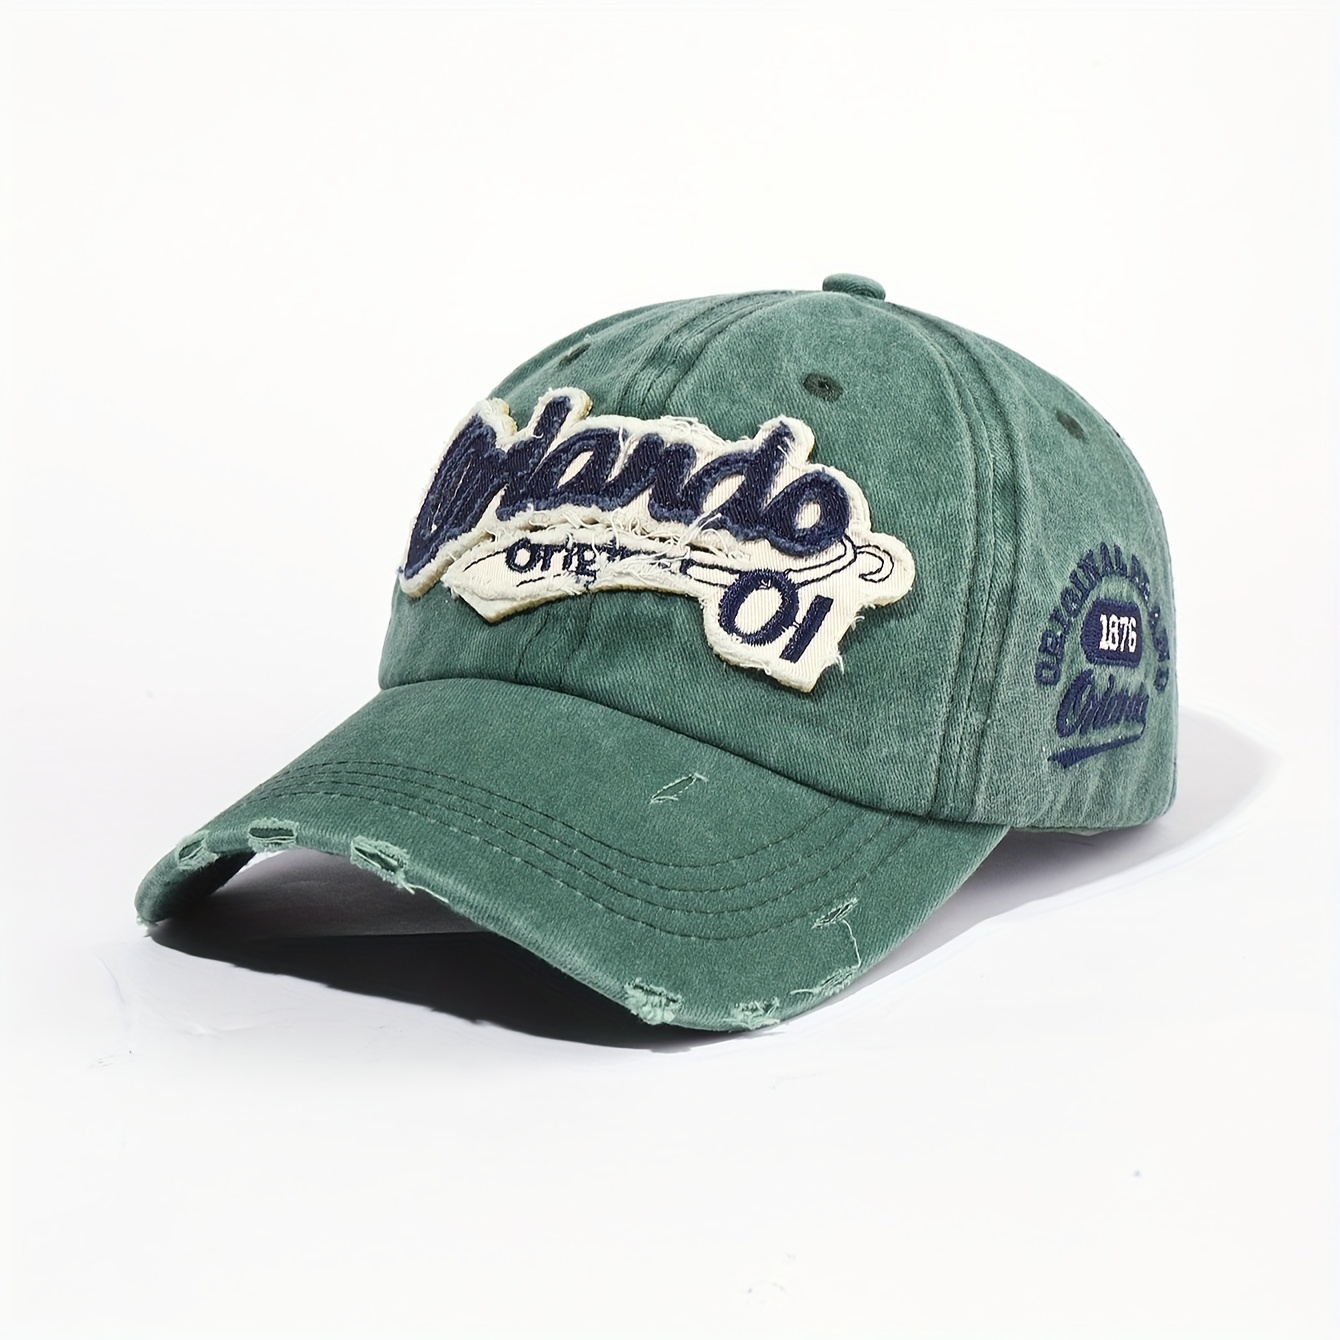 

Orlando Letter Patch Baseball Cap Vintage Green Washed Distressed Dad Hats Trendy Adjustable Sports Hat For Women Men